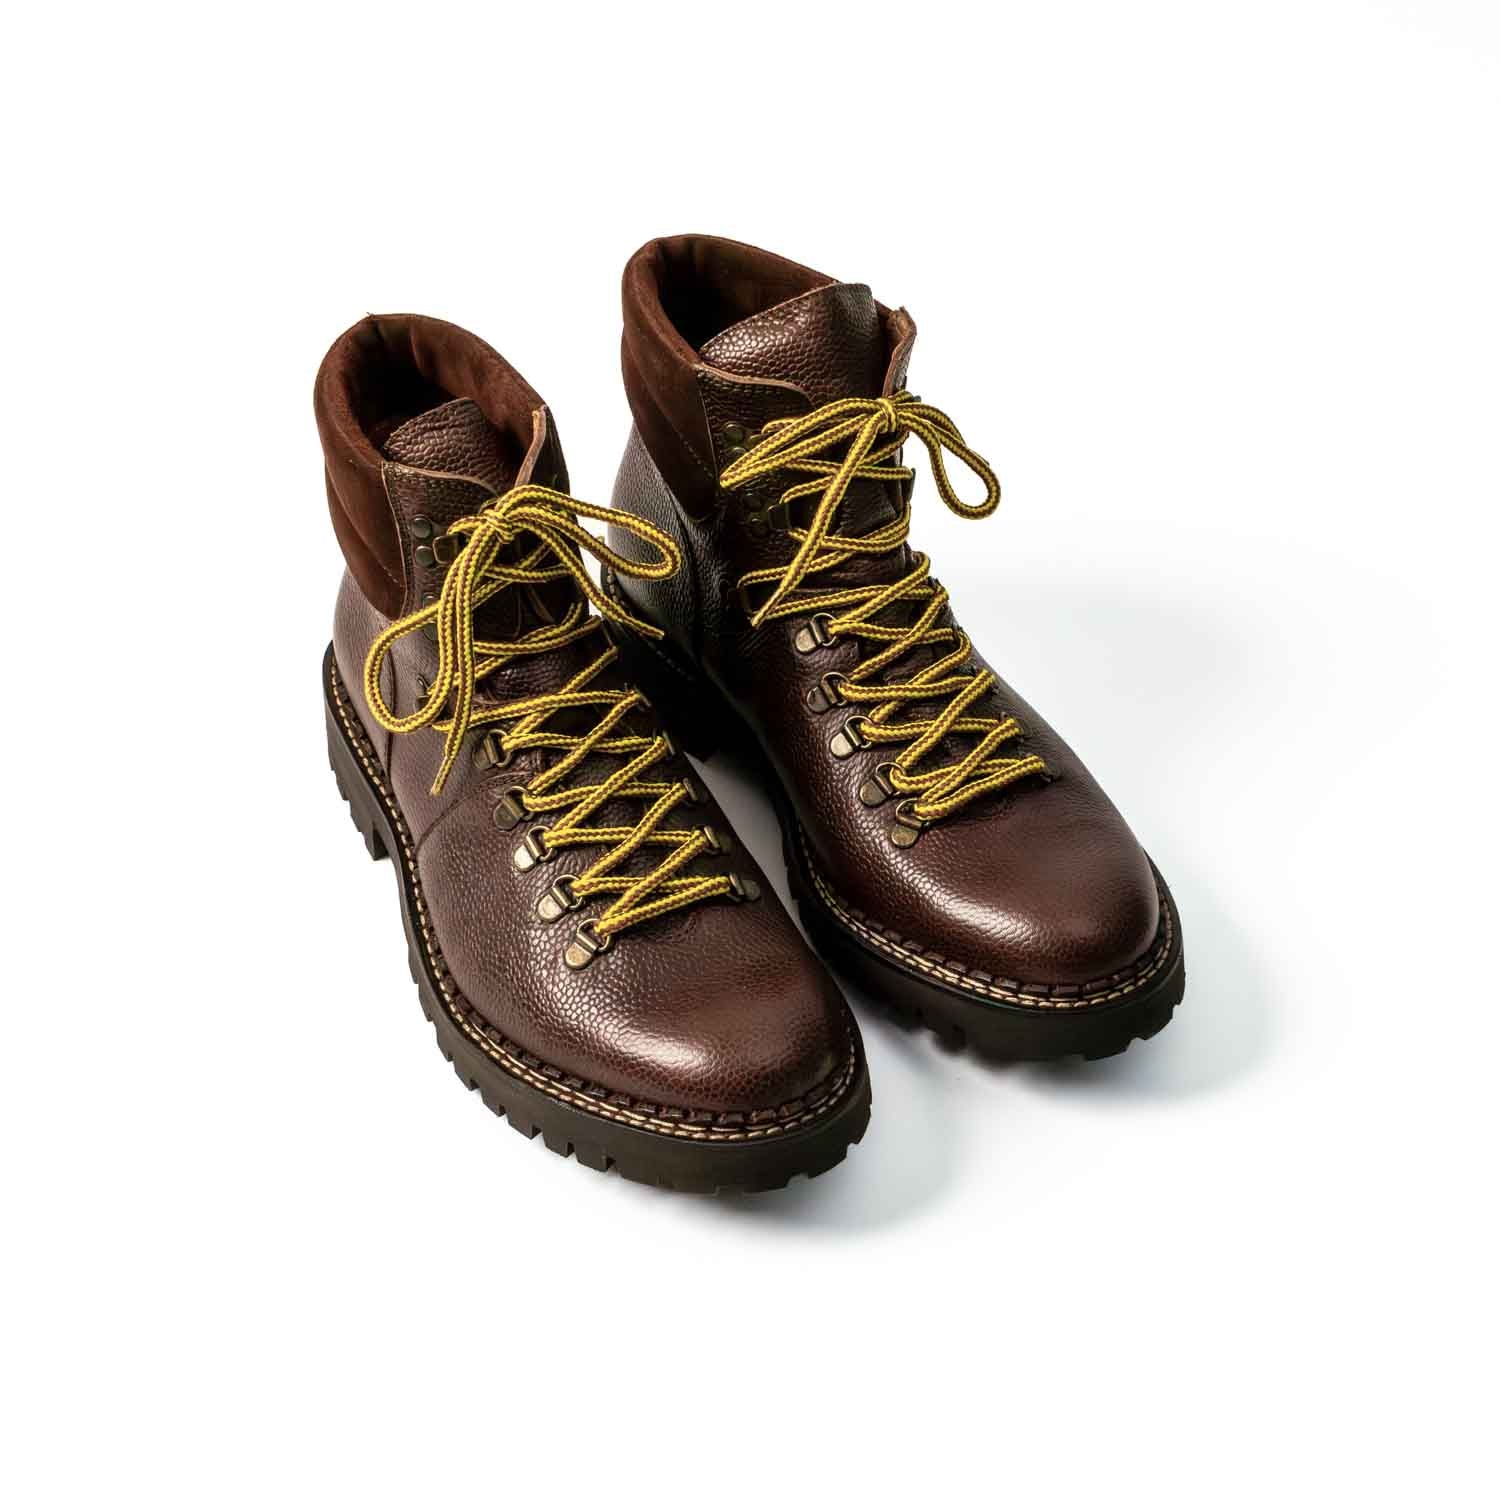 Cliff - Chaussures Hiking Boots Cuir Grainé Marron